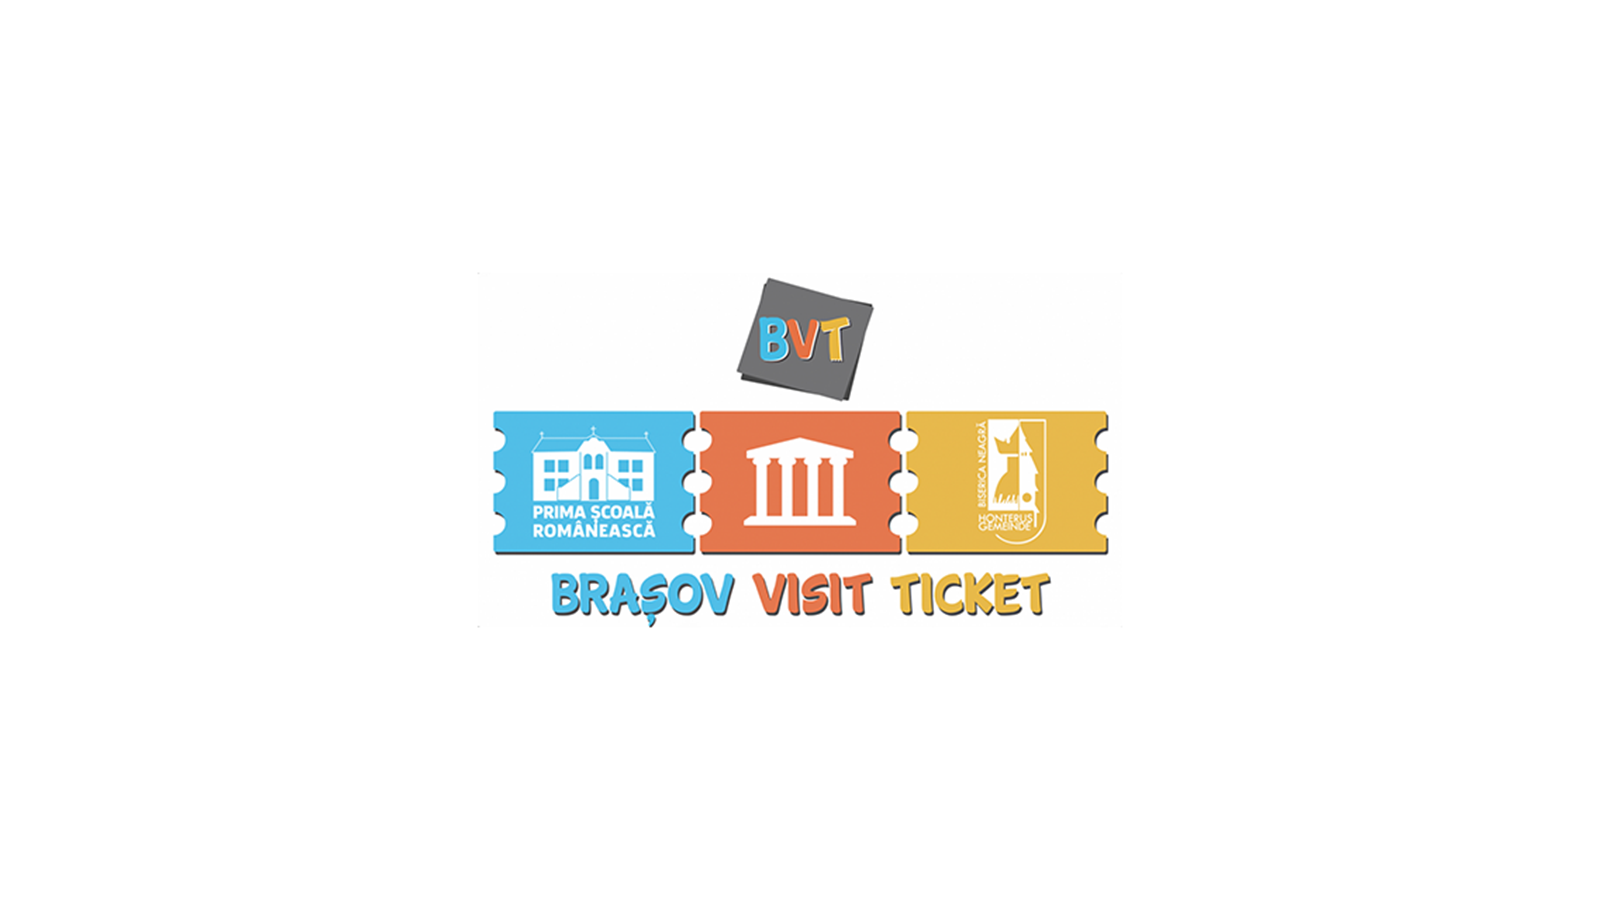 Brasov Visit Ticket